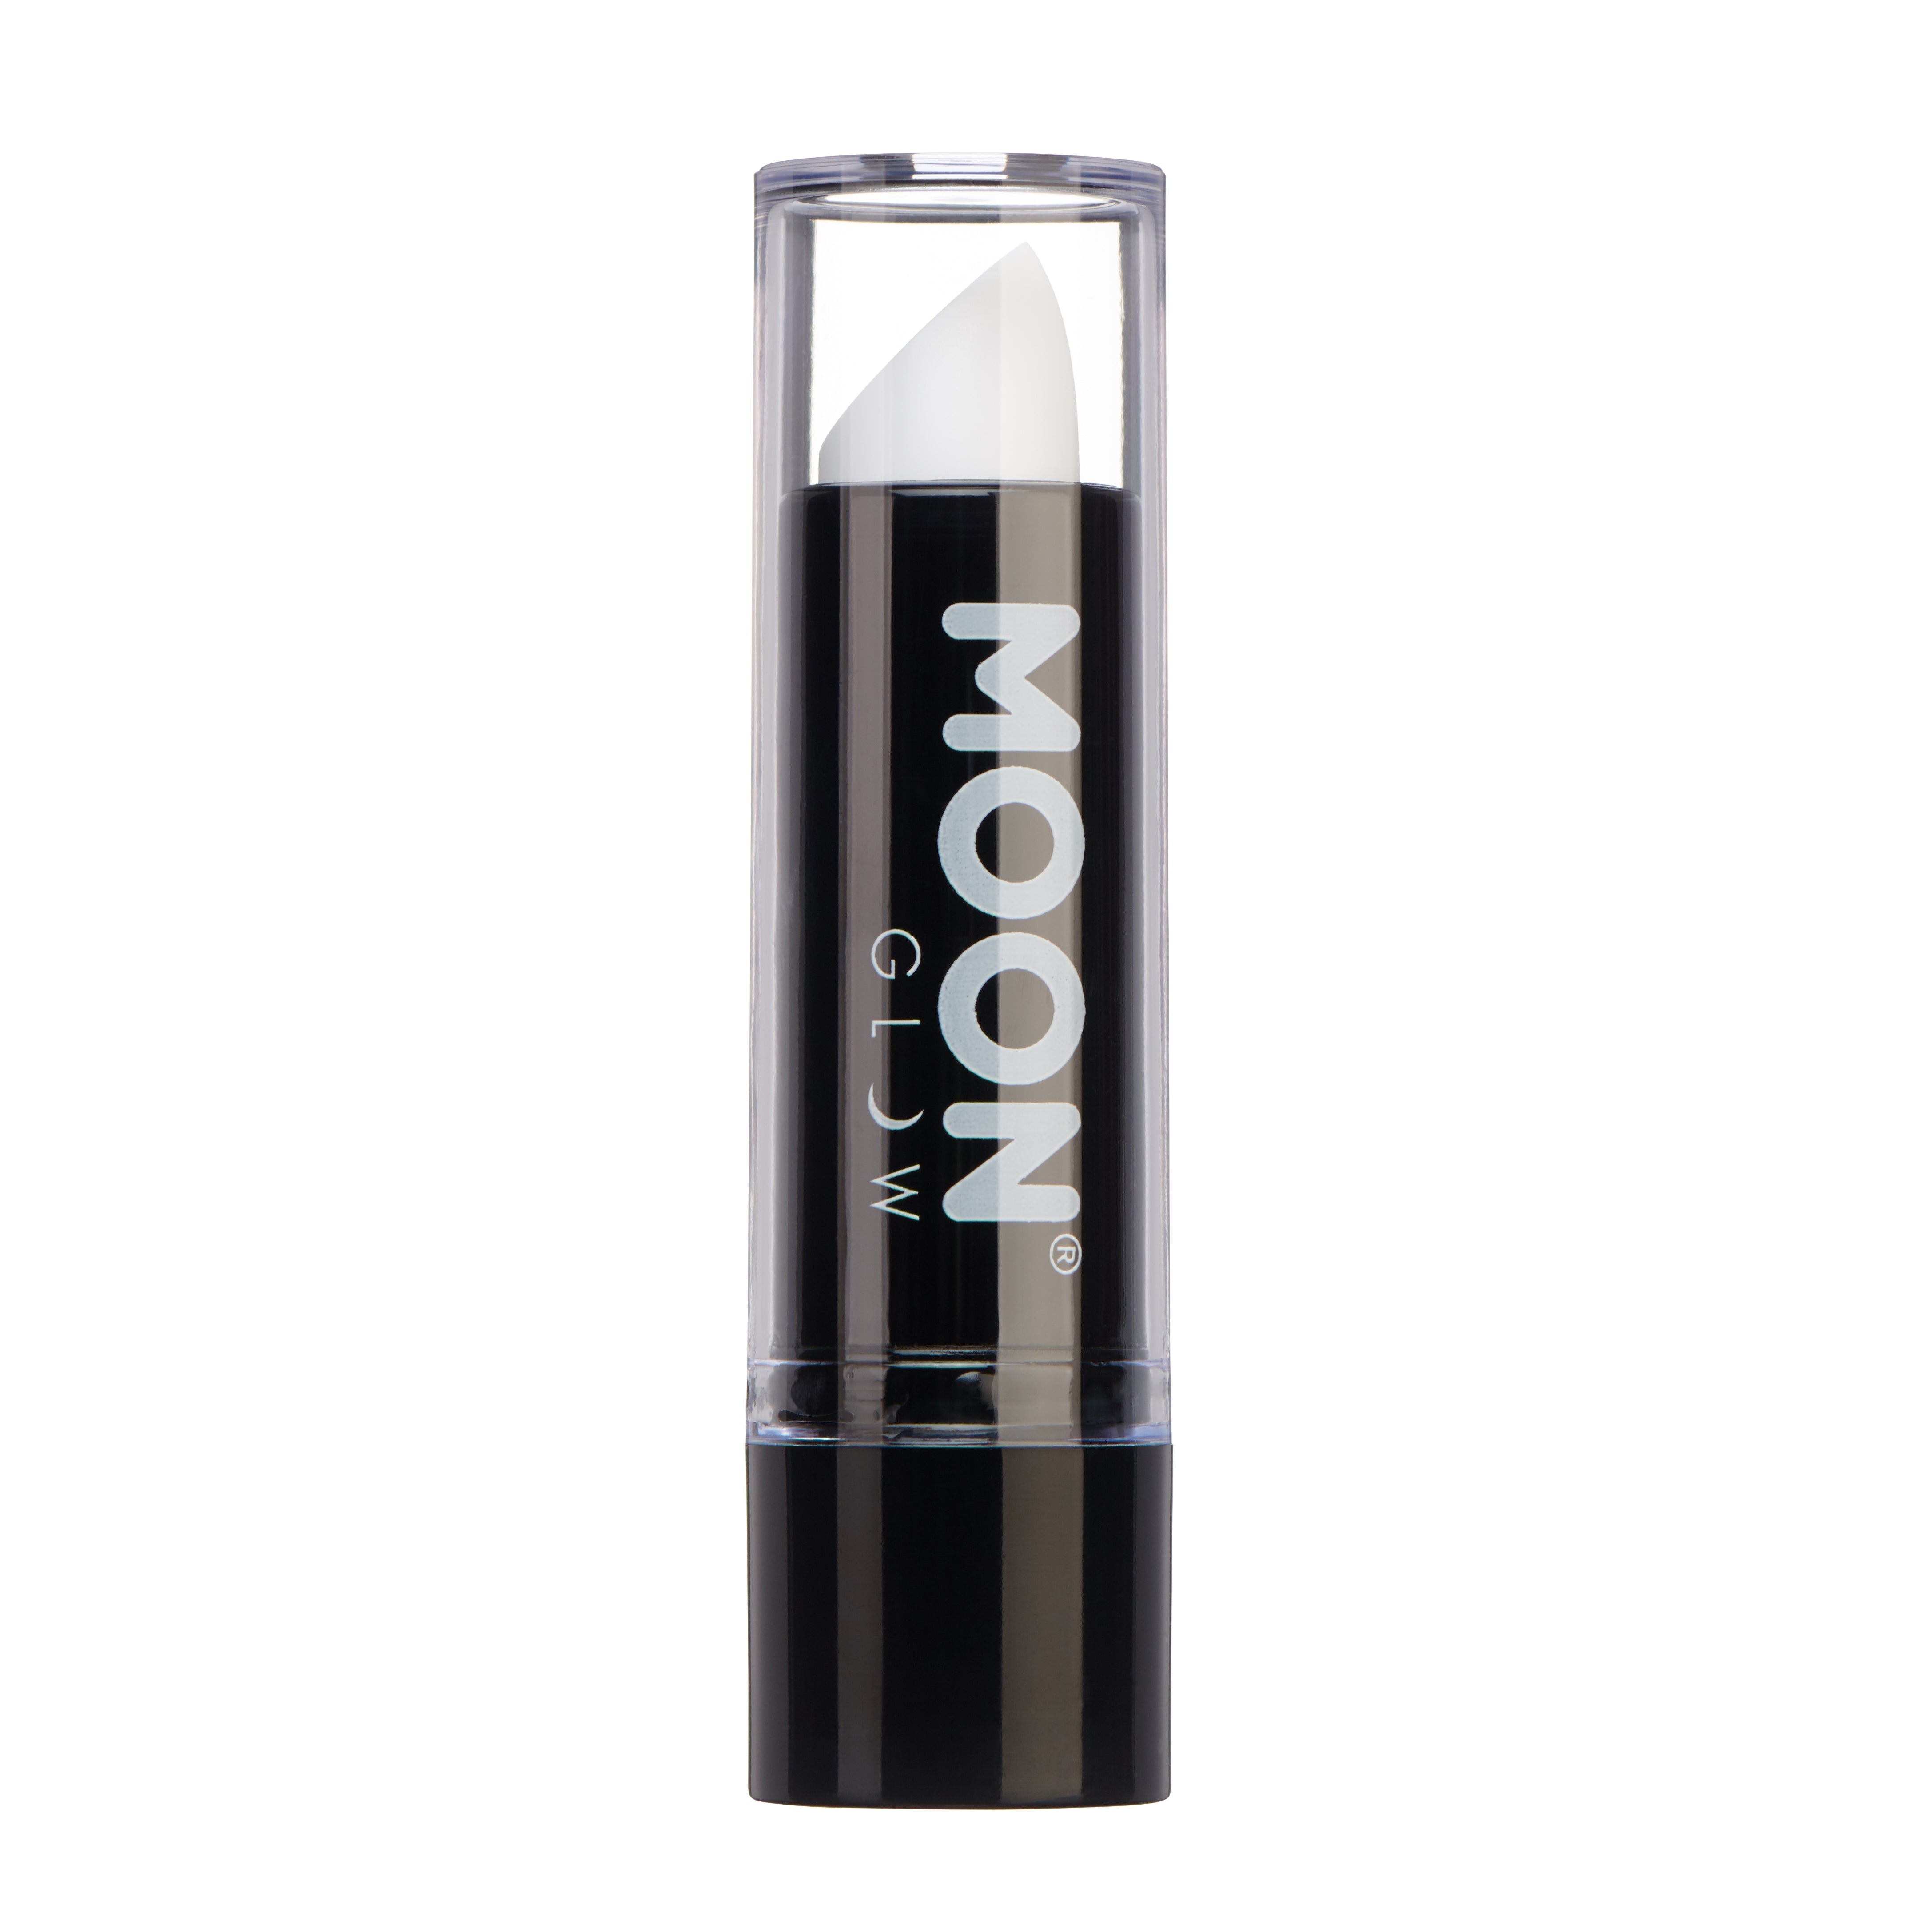 White - Neon UV Glow Blacklight Lipstick, 5g. Cosmetically certified, FDA & Health Canada compliant and cruelty free.